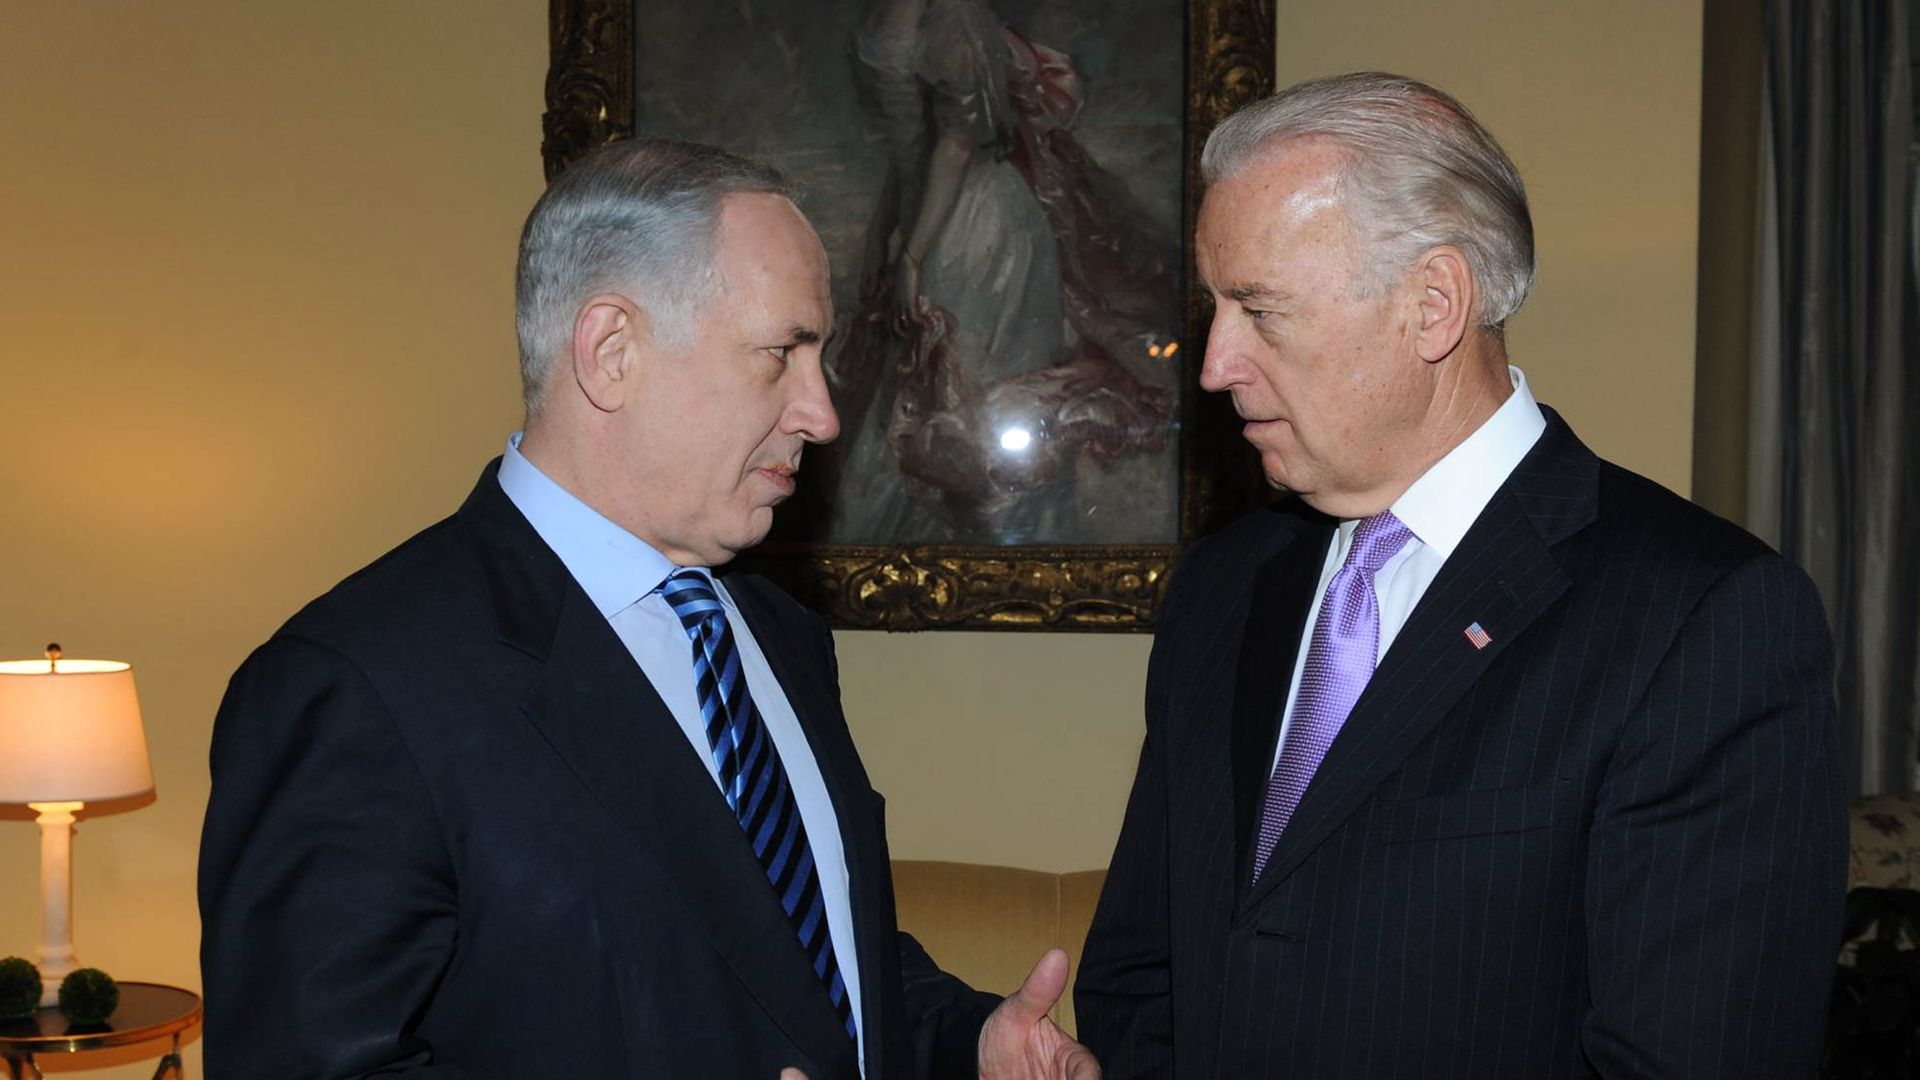 Biden and Netanyahu in March 2010. Photo: Amos Ben Gershom/GPO via Getty Images